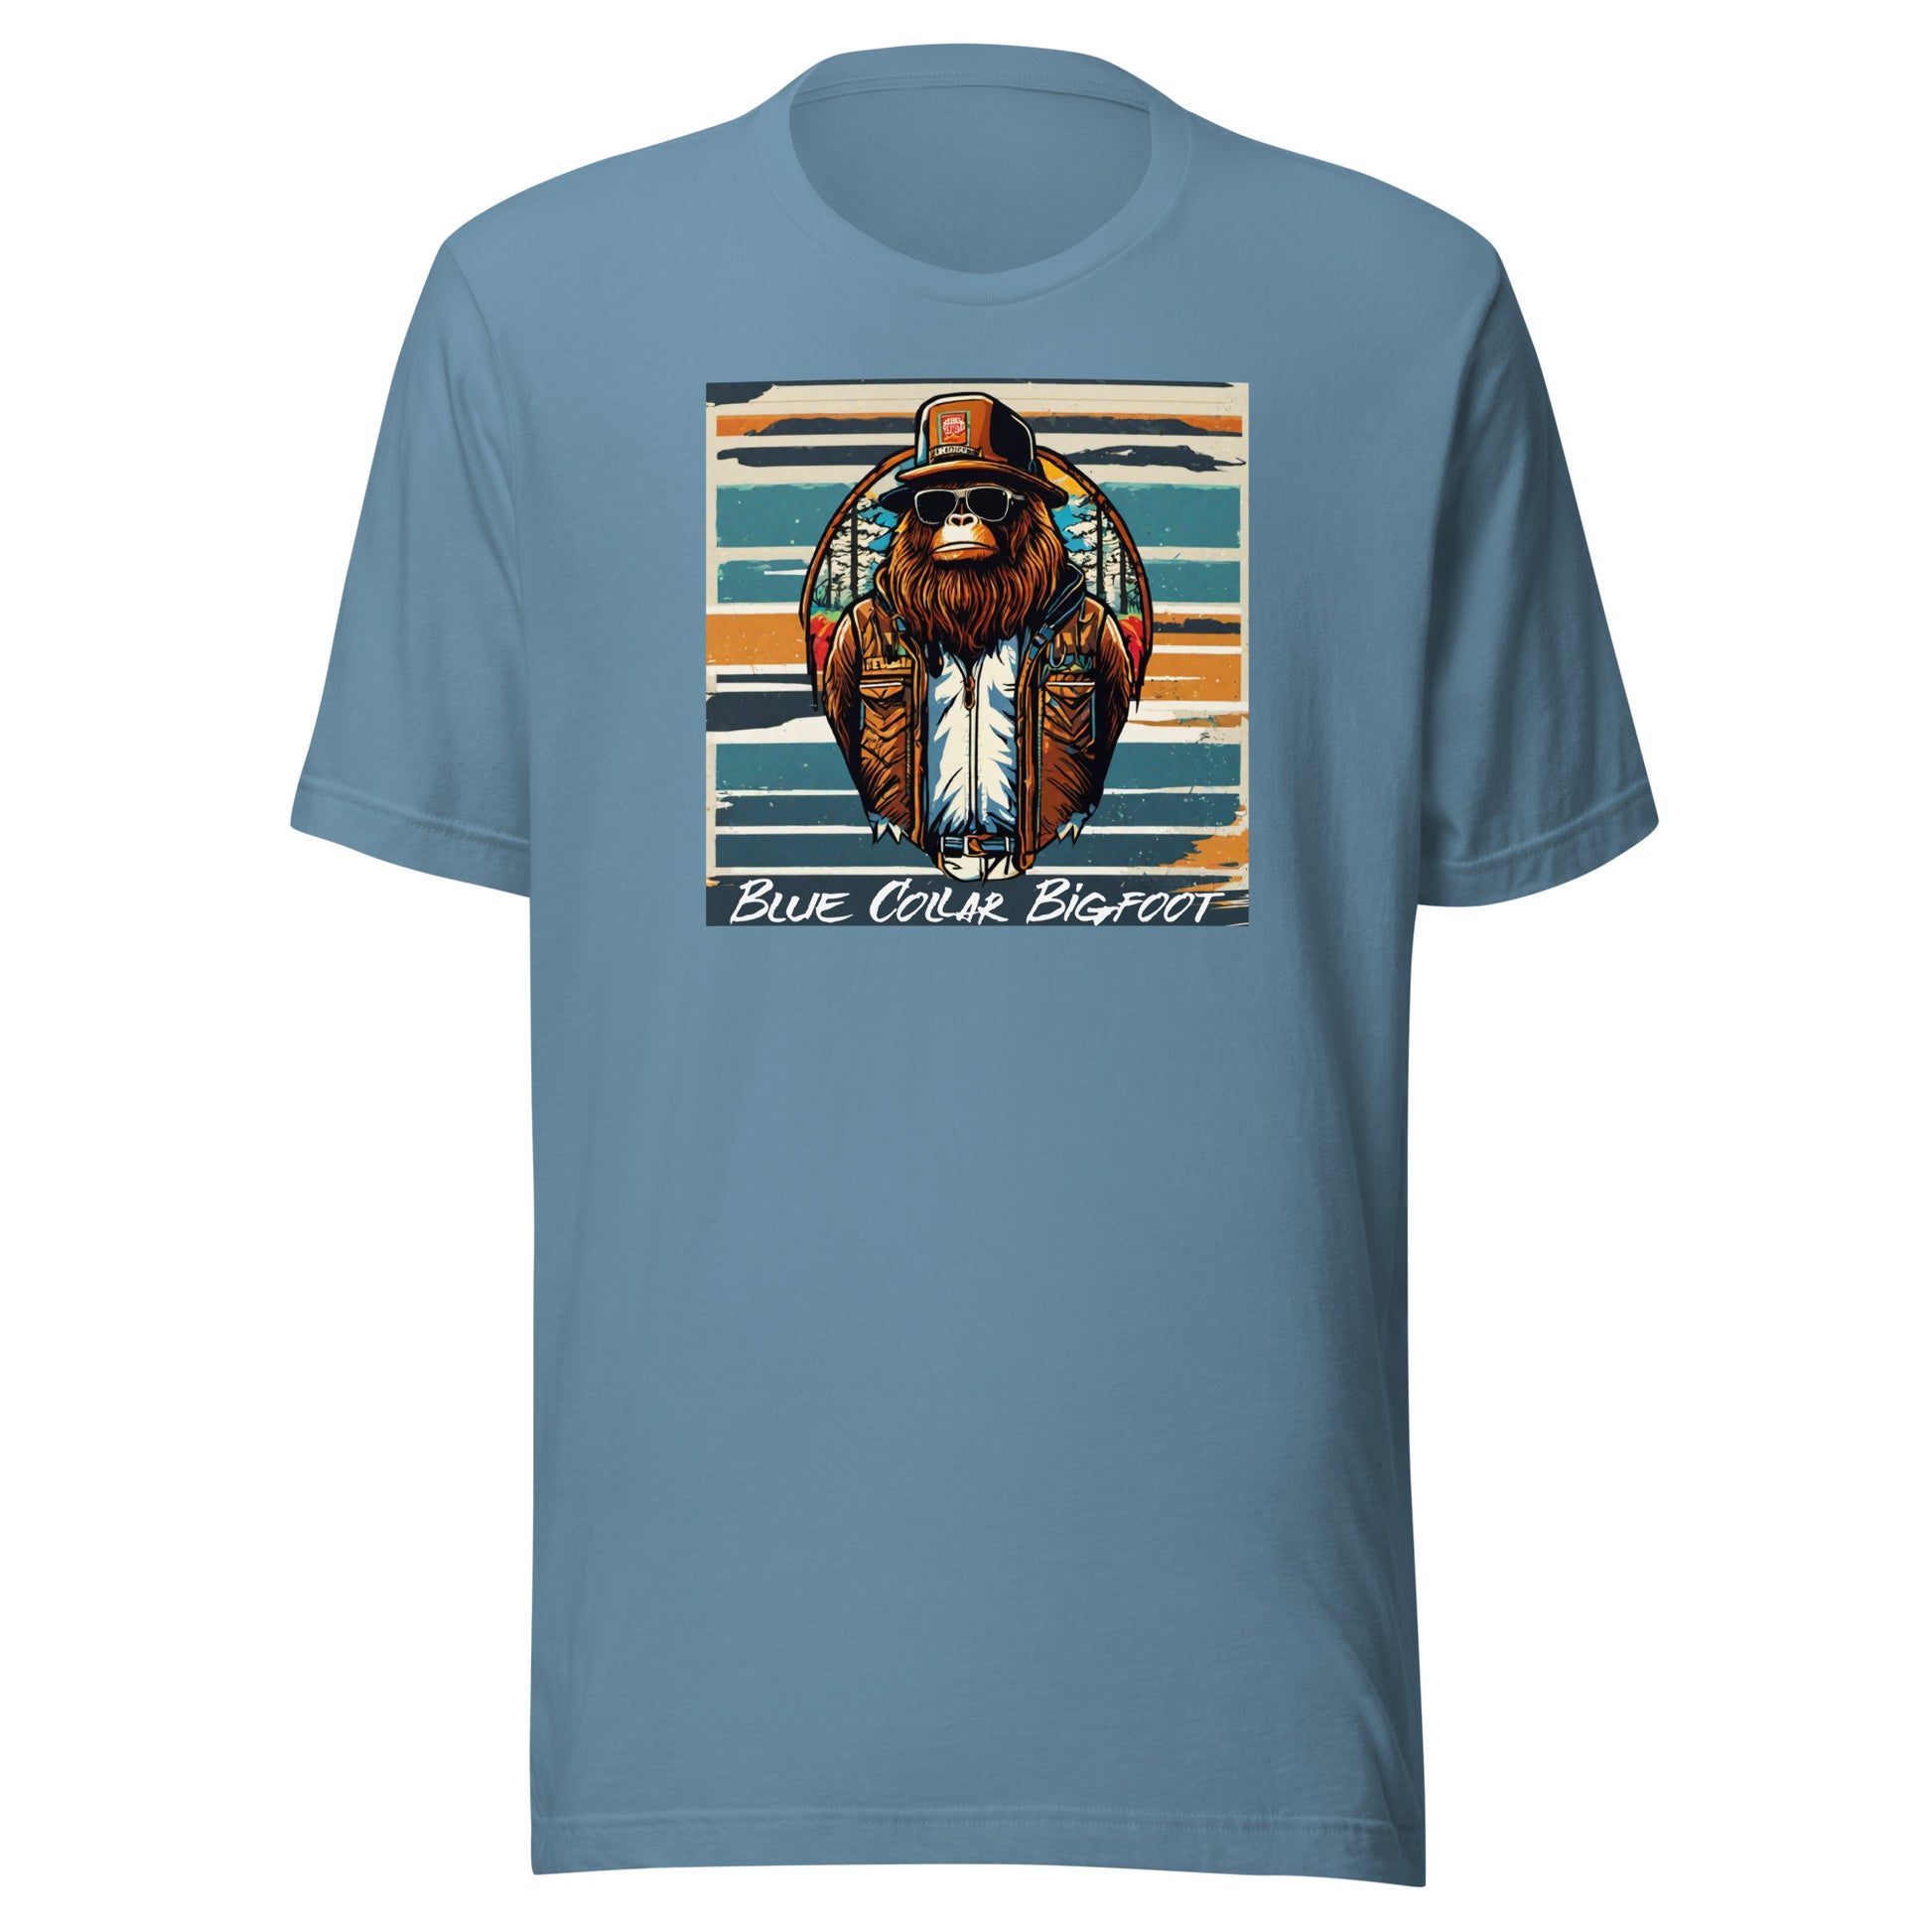 Blue-Collar Bigfoot Men's Graphic T-Shirt Steel Blue